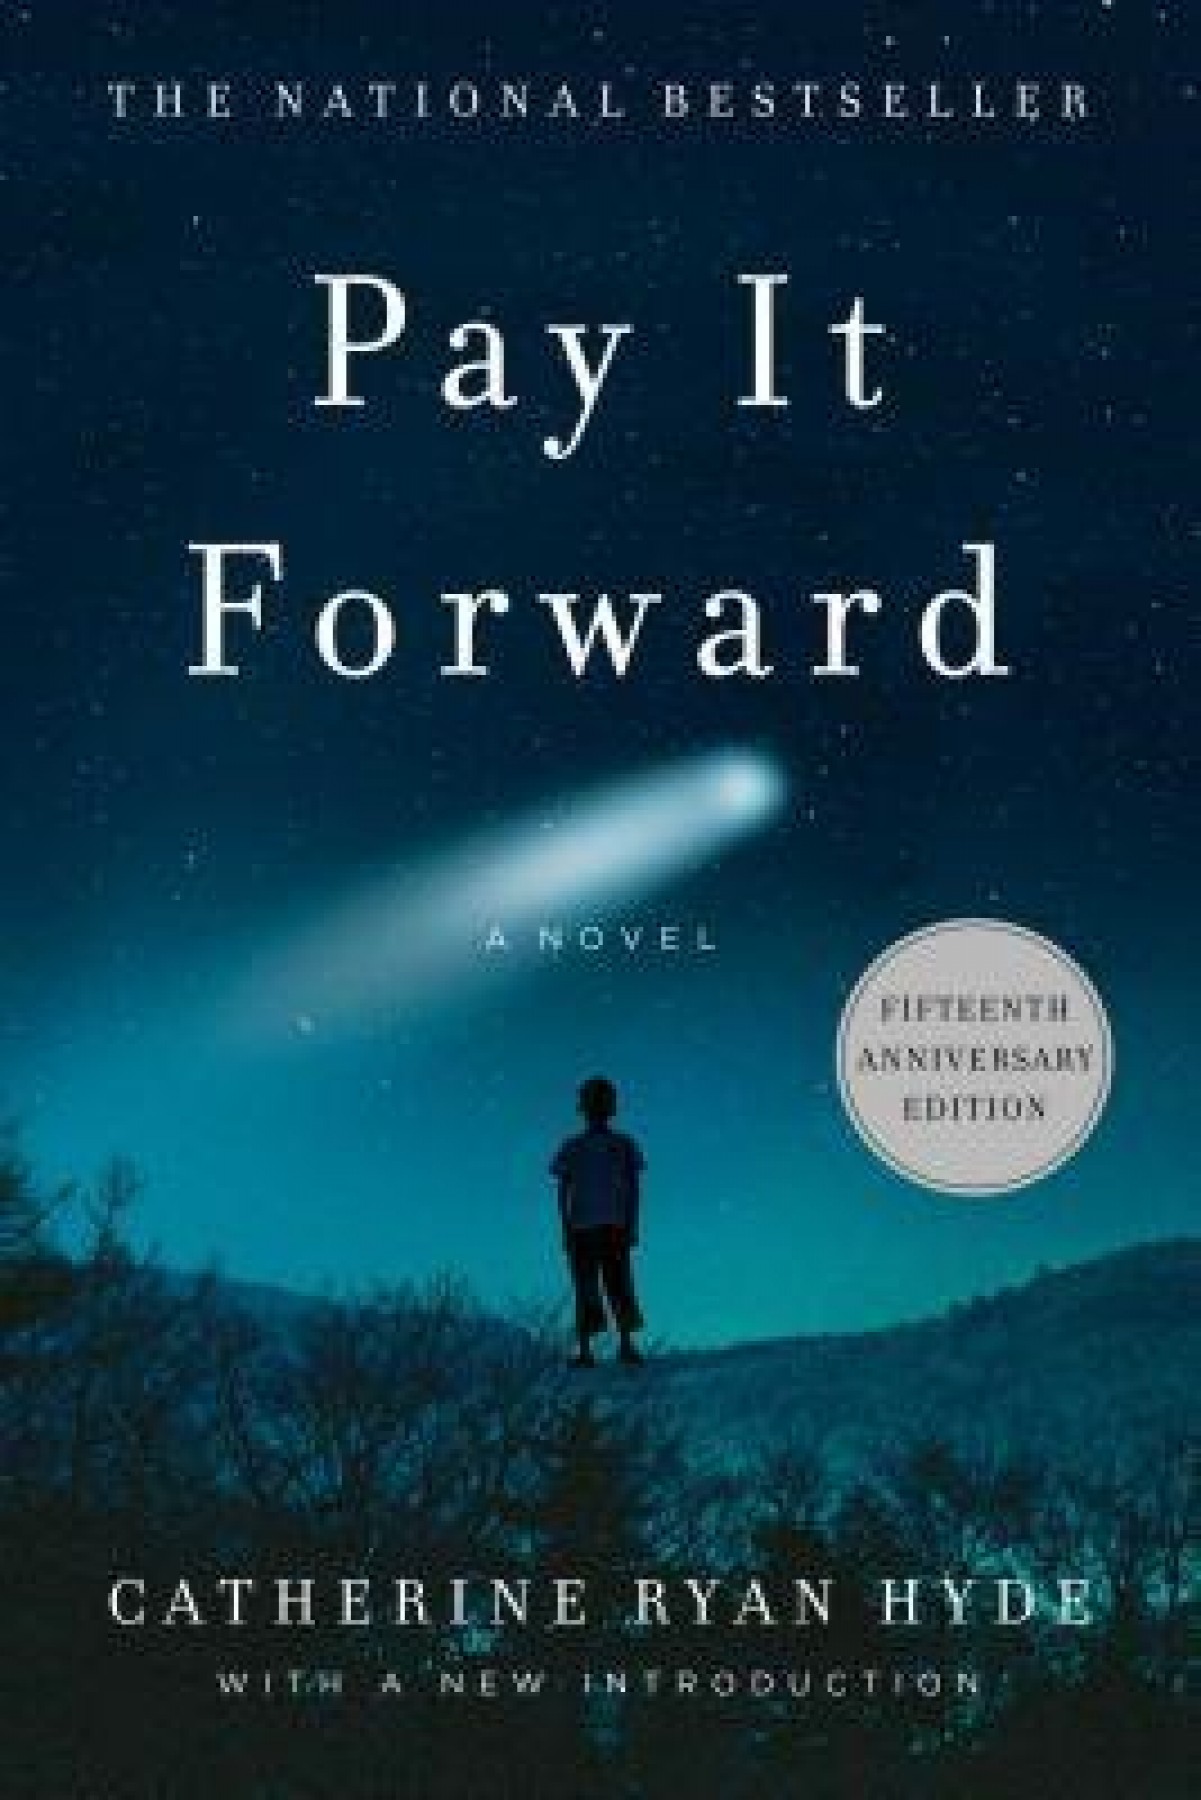 Pay It Forward: A novel